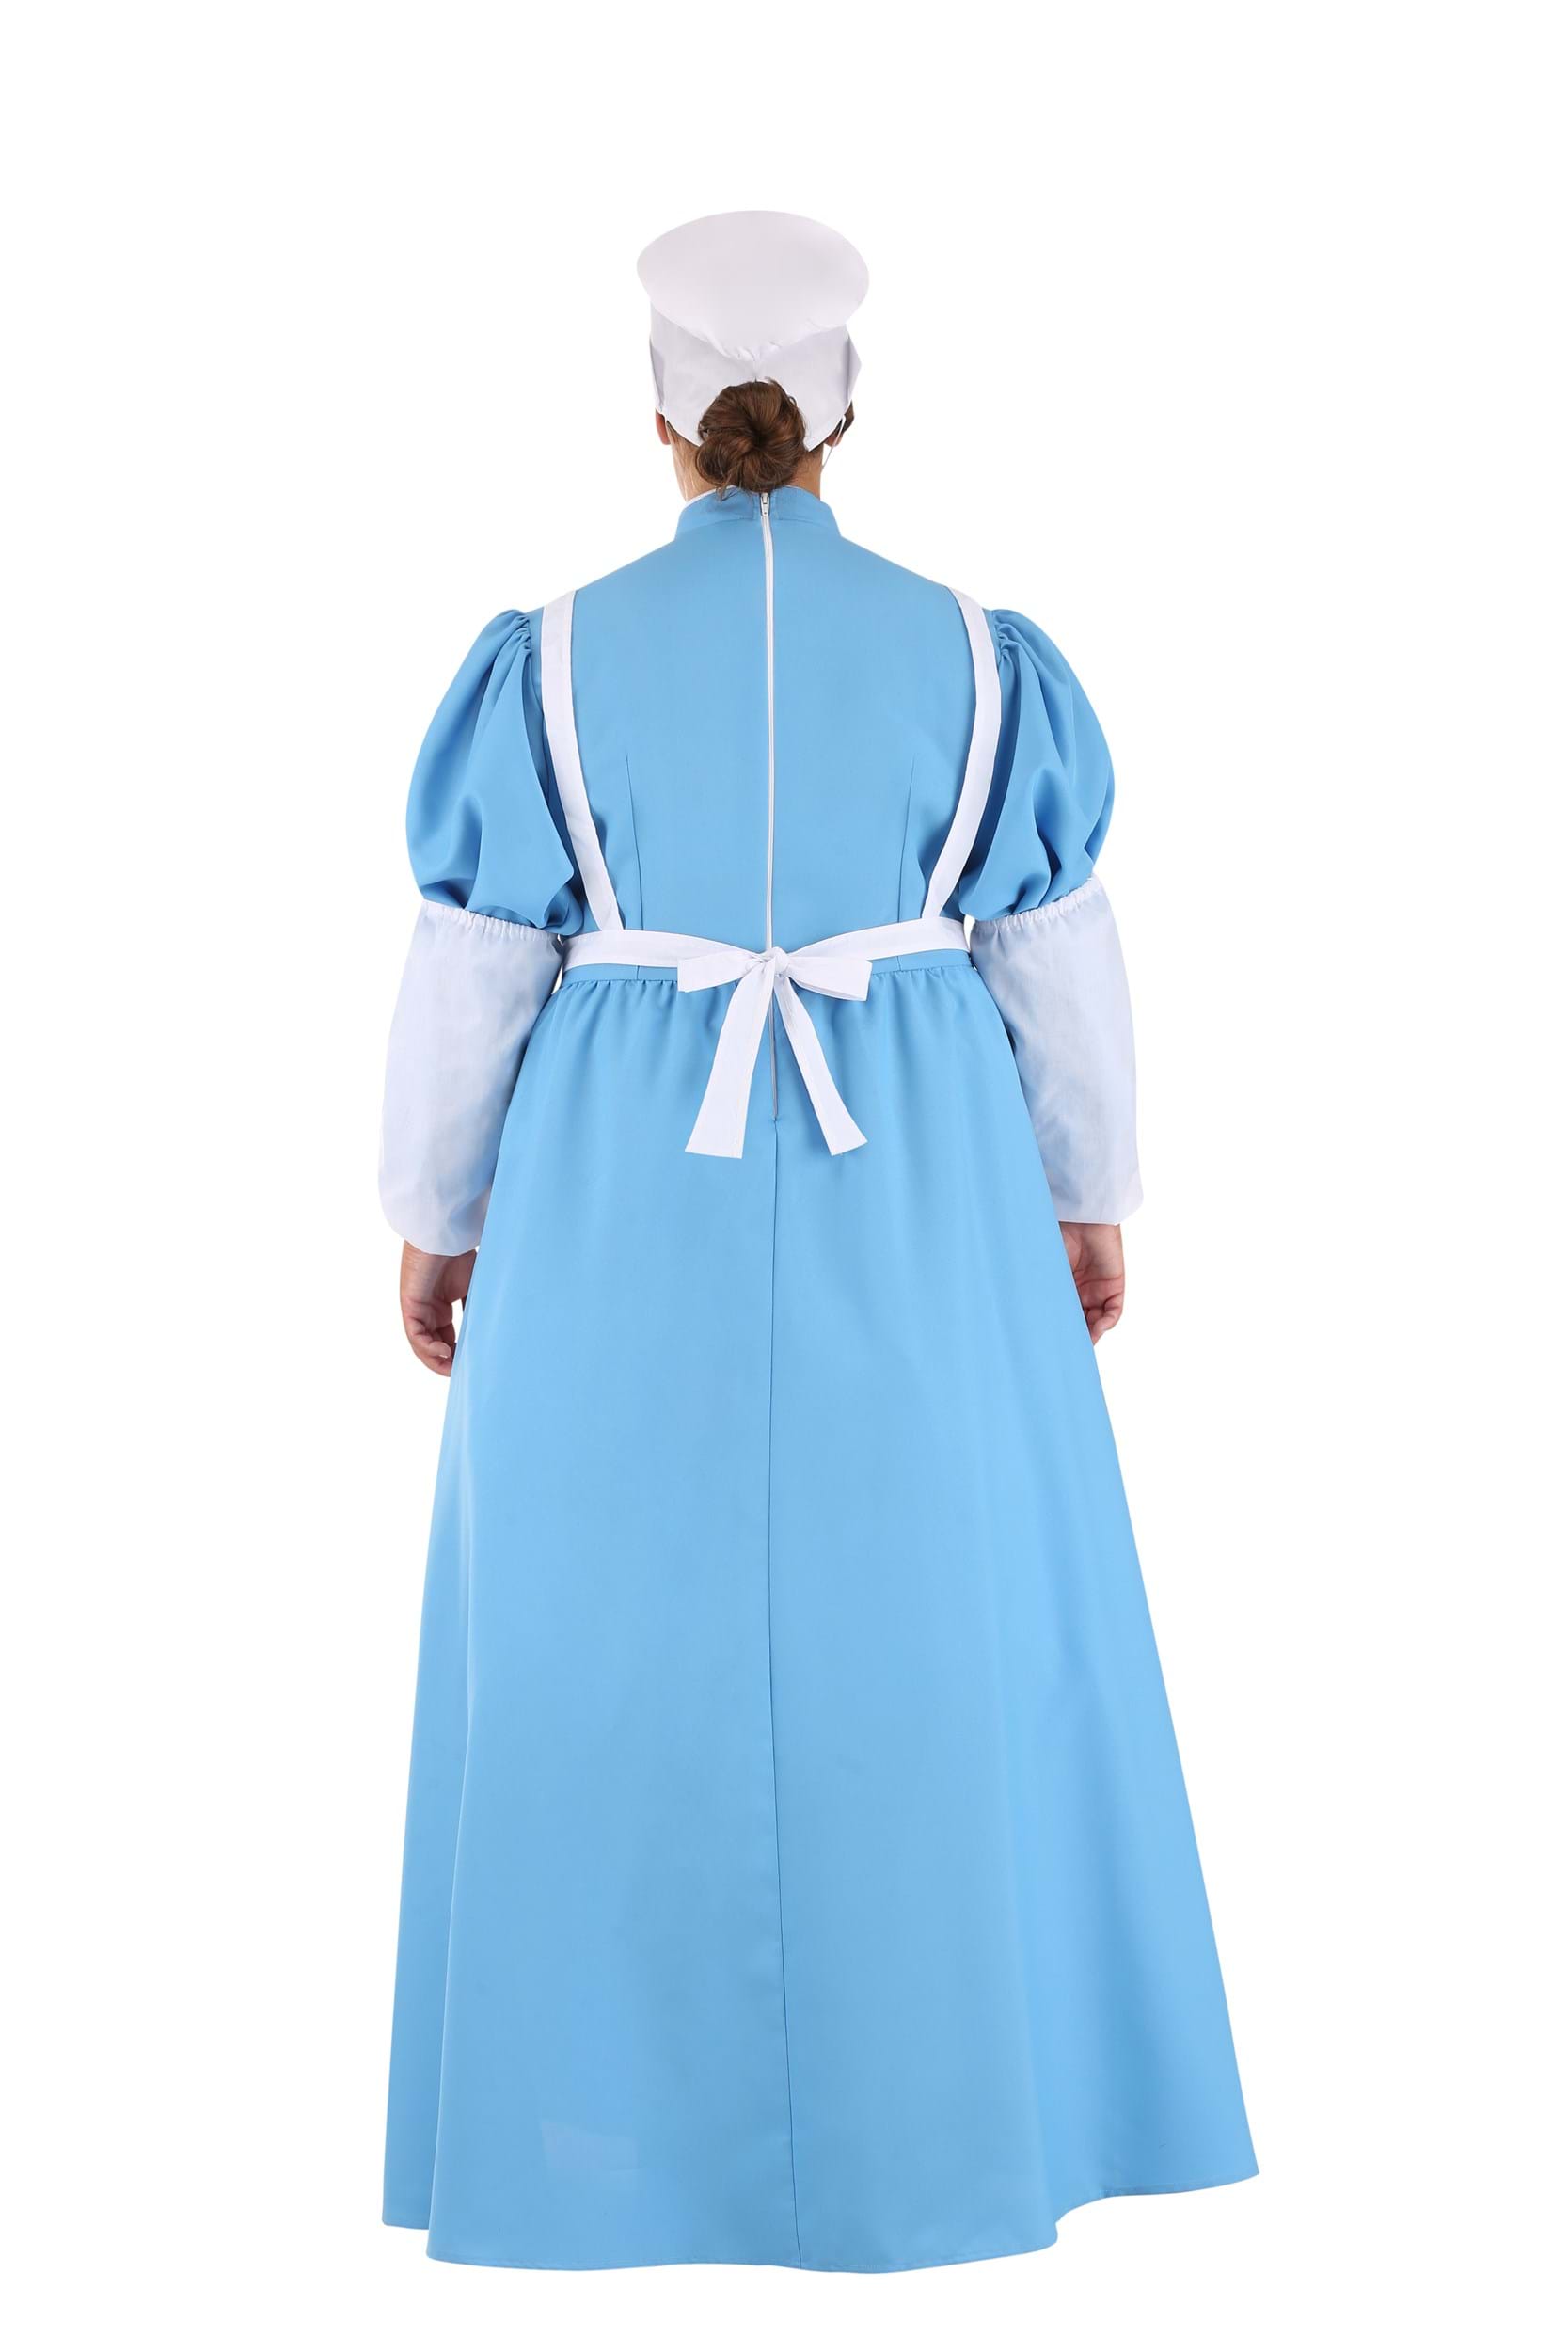 Plus Size Clara Barton Red Cross Fancy Dress Costume